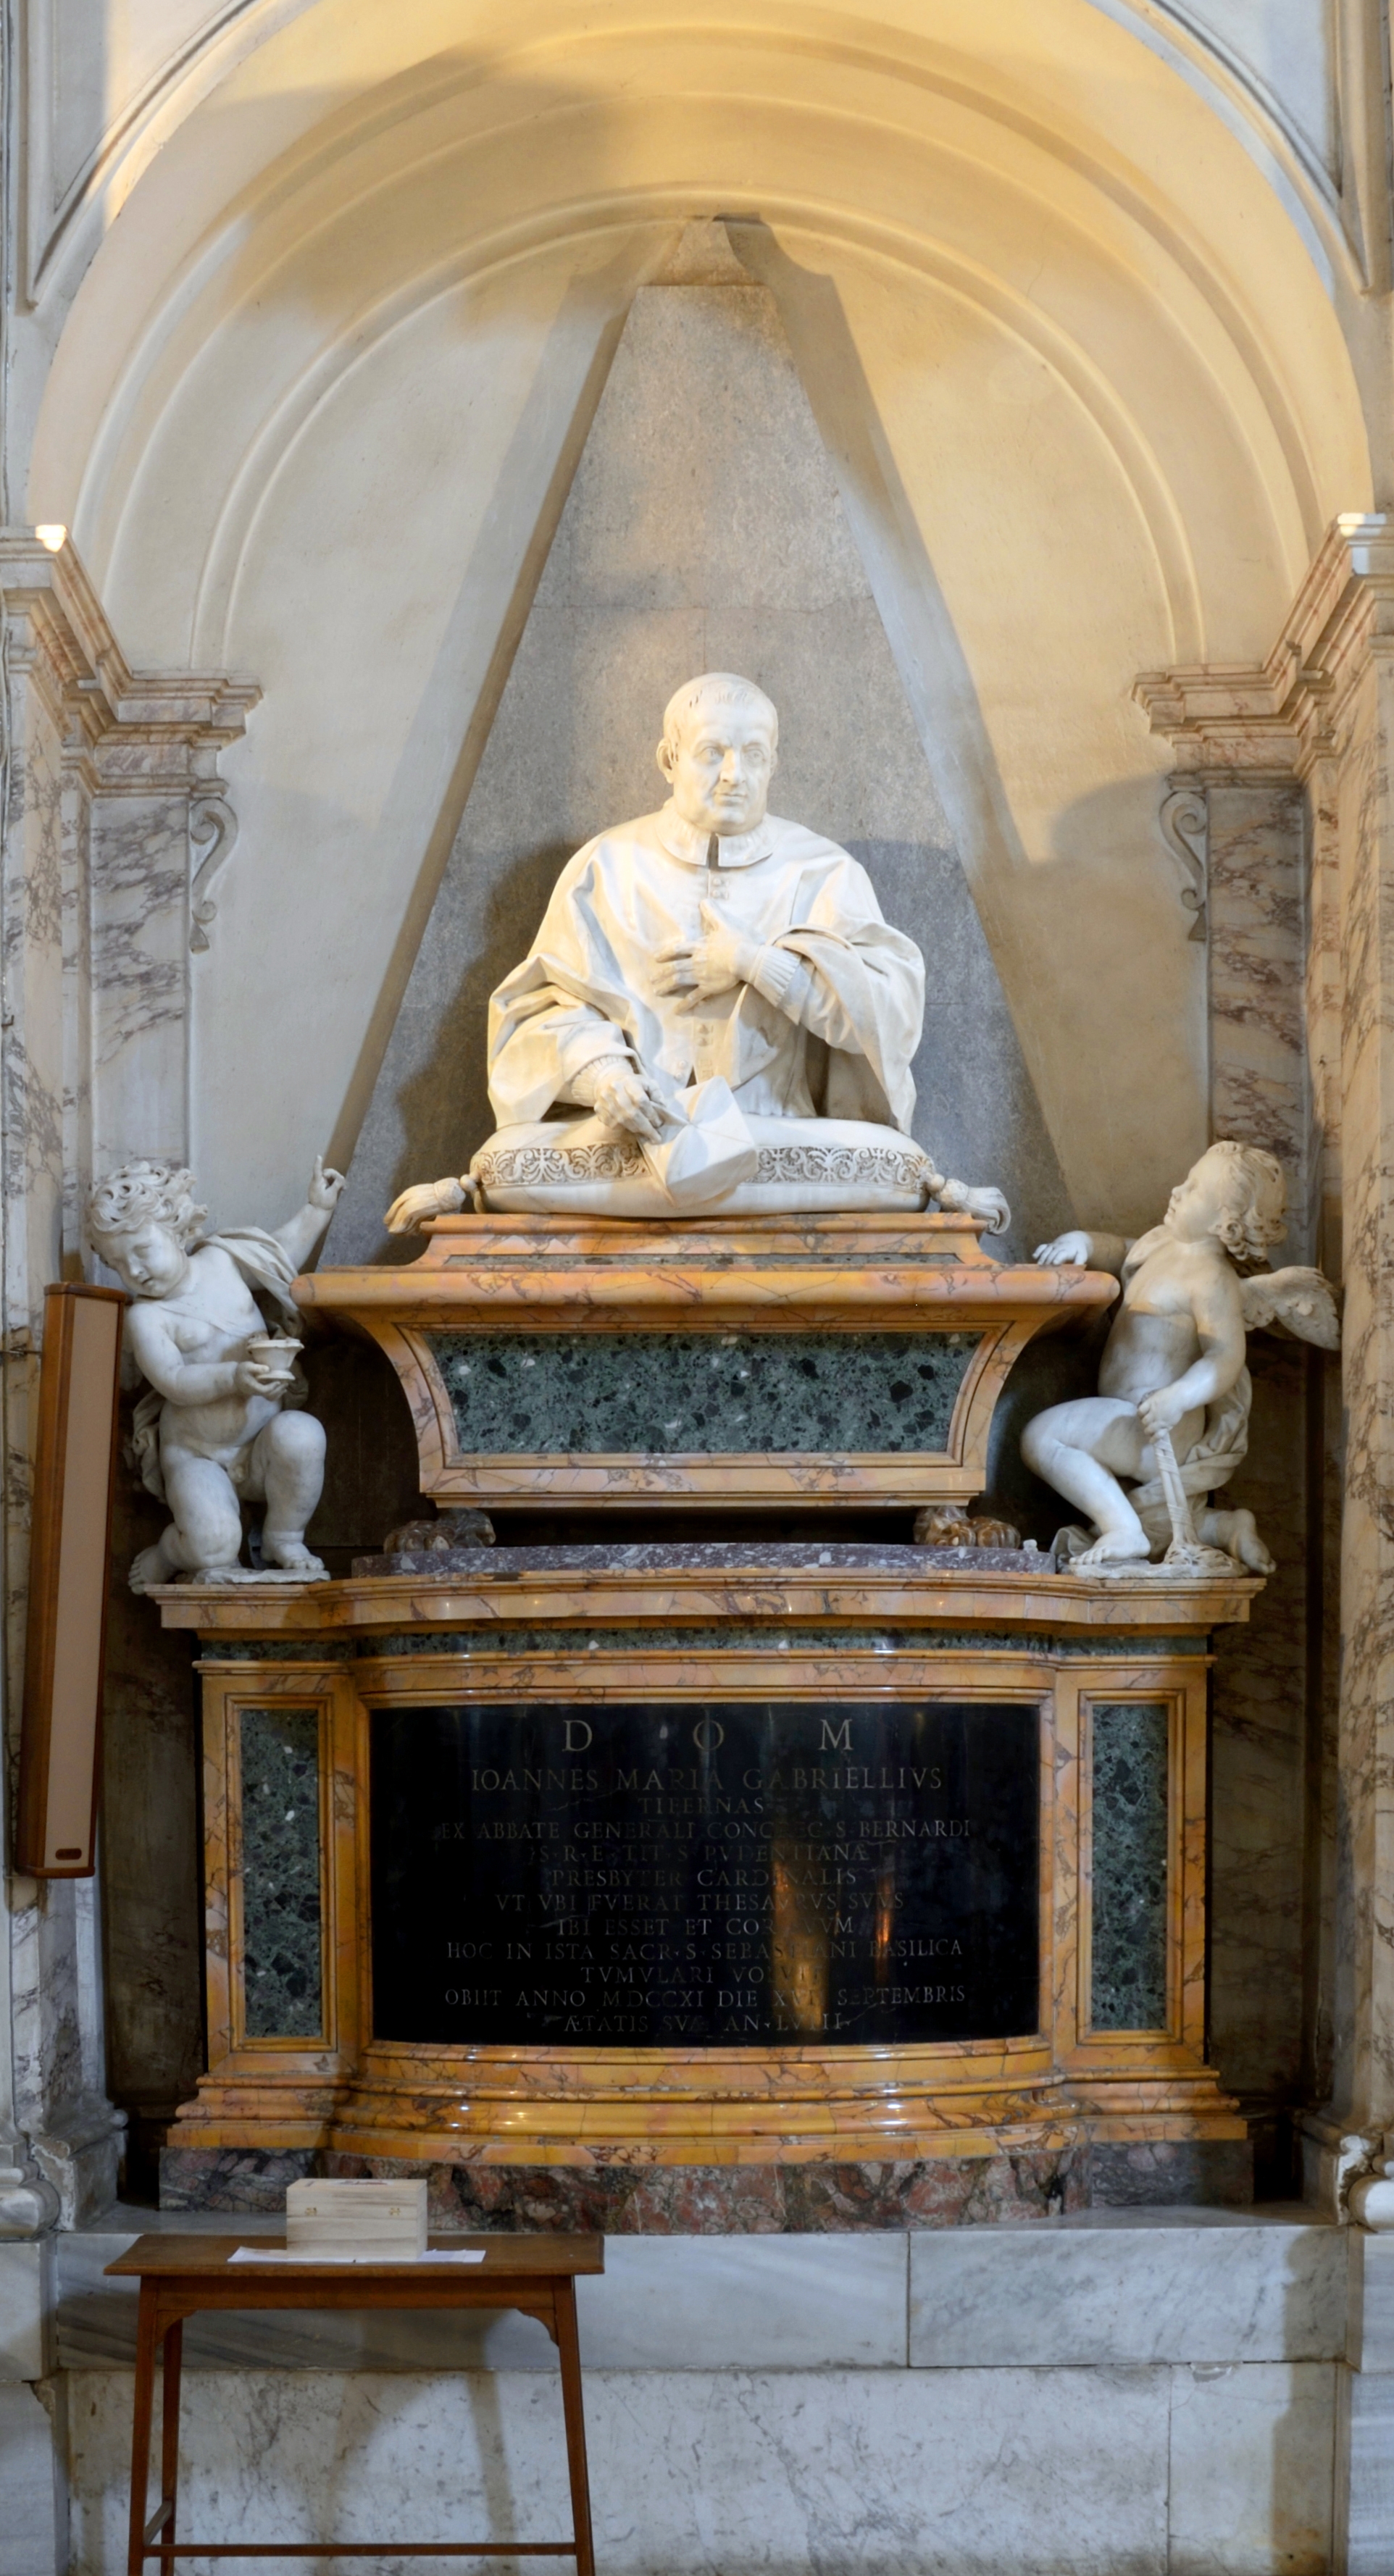 Tomb of Giovanni Maria Gabrielli in San Sebastian outside the walls